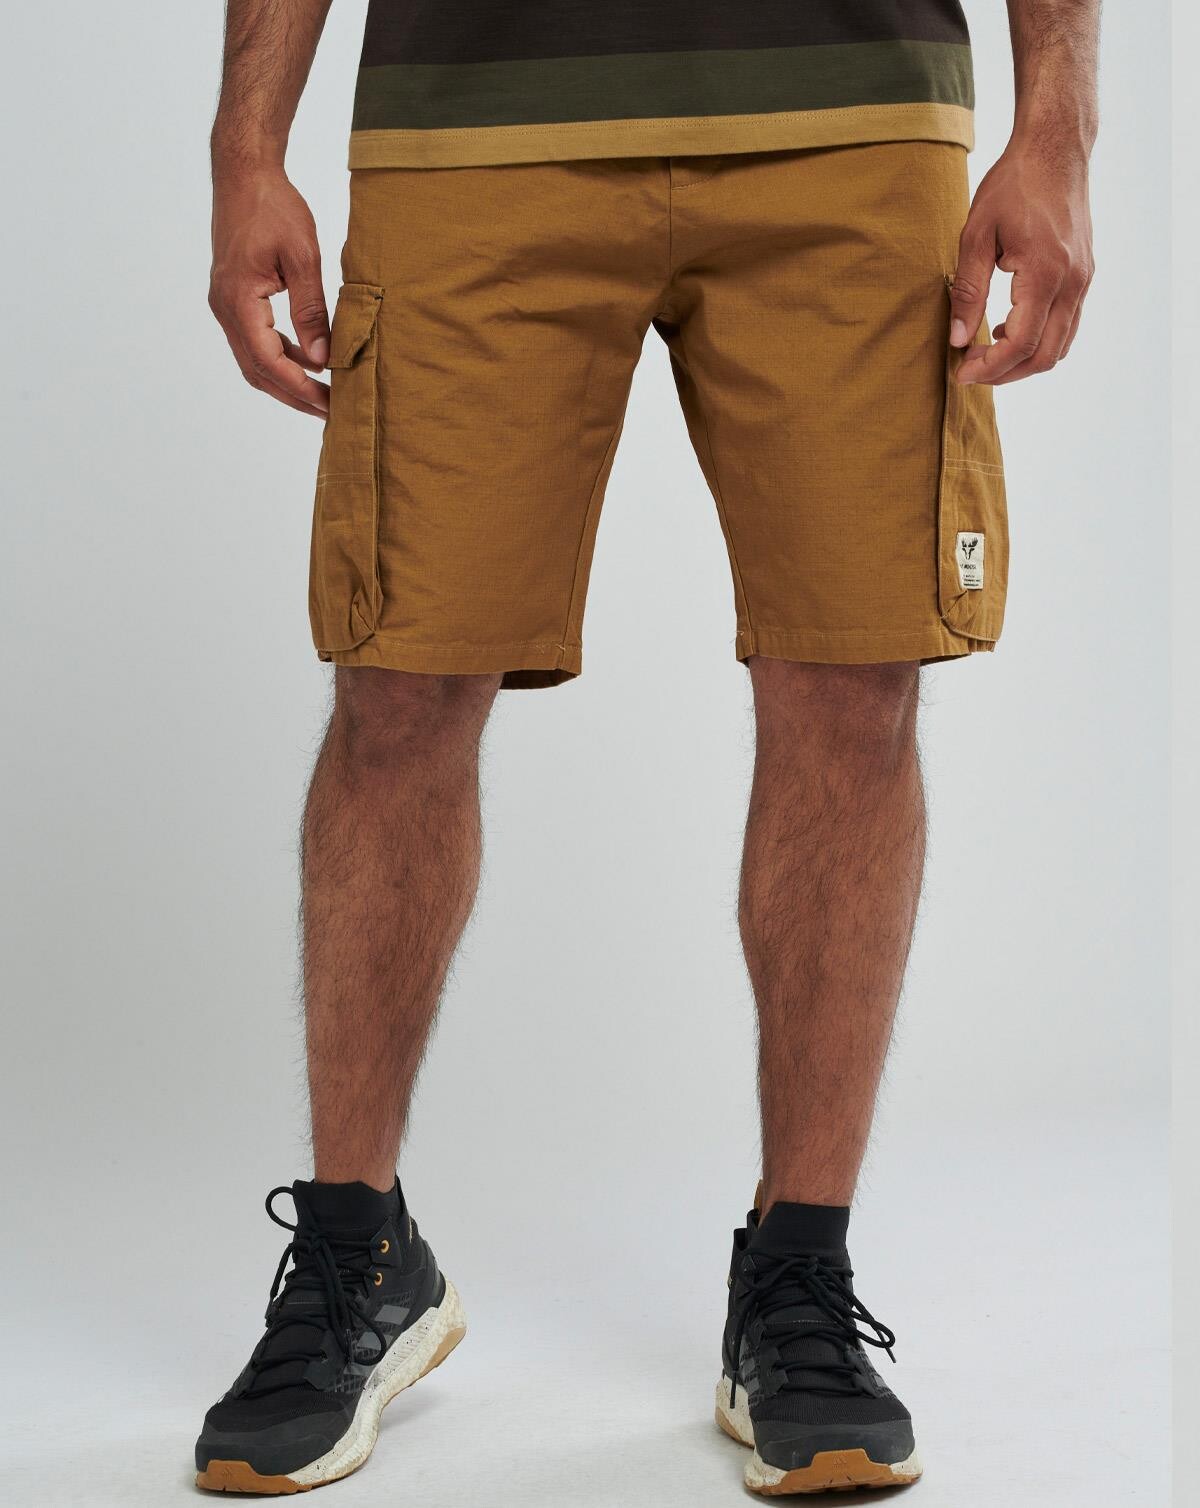 #2 - Fat Moose Tap Cargo Shorts (Khaki, M)